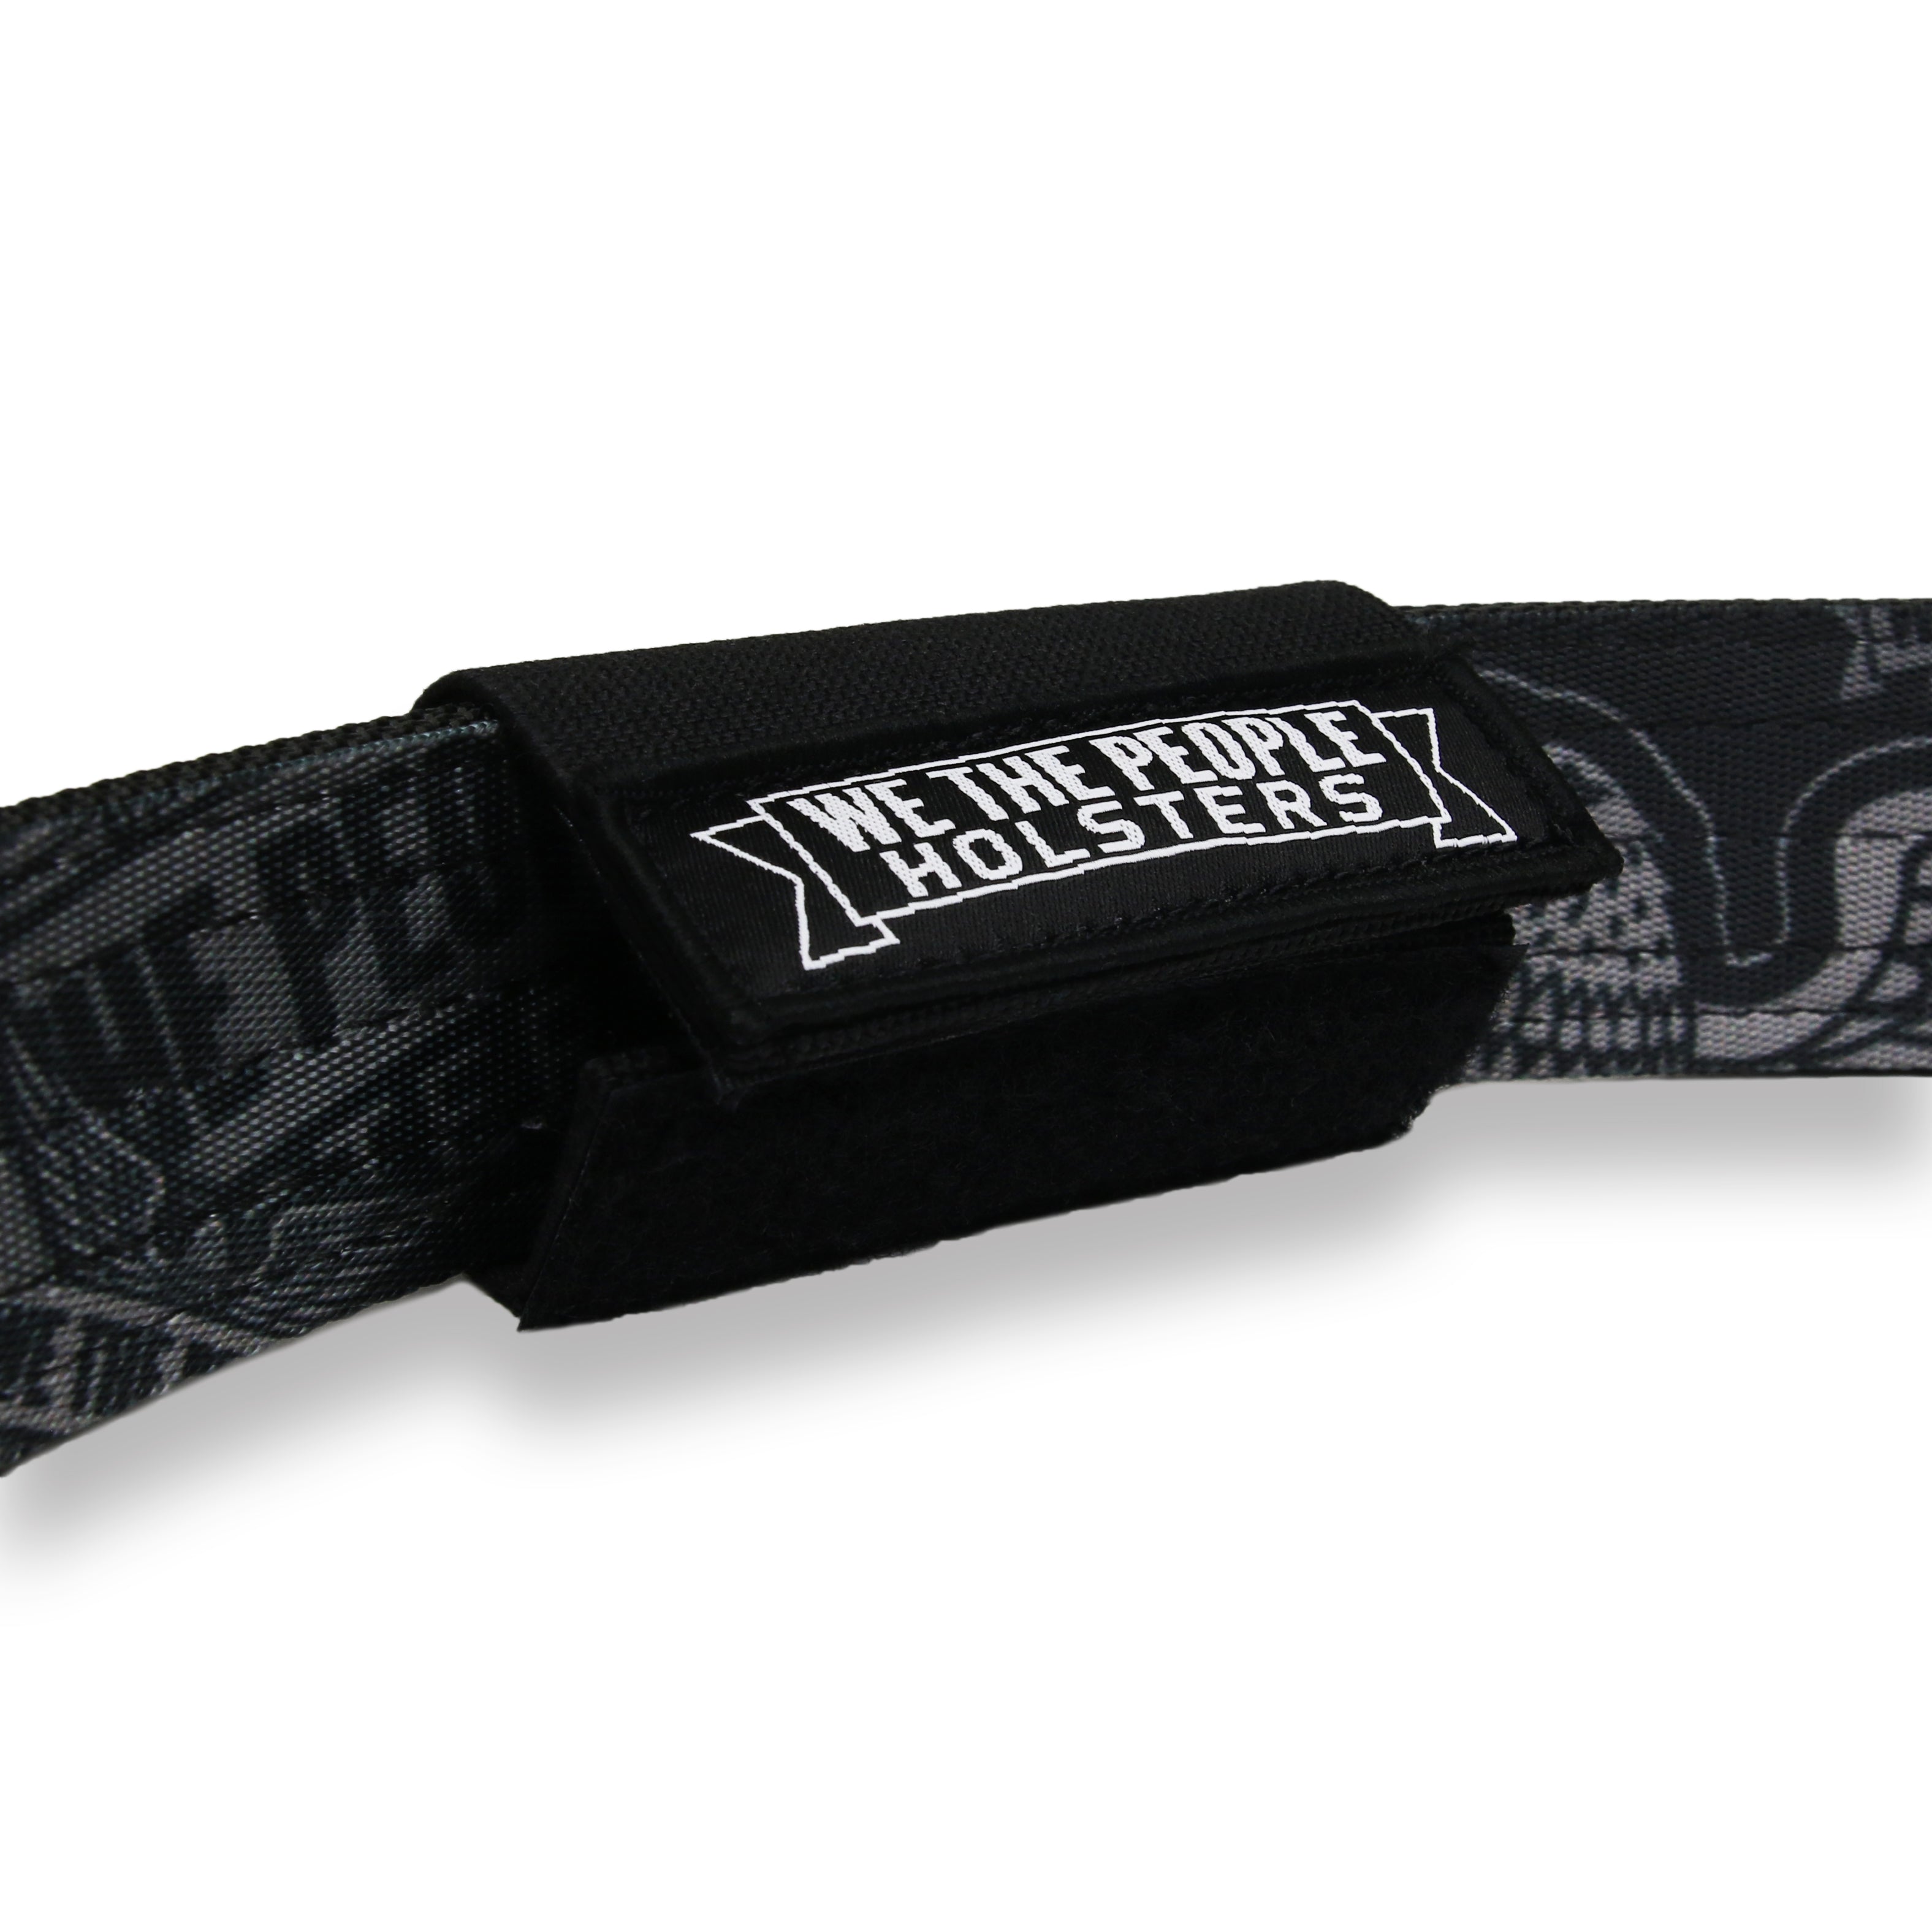 Gun Belt  Order a Concealed Carry Tactical Belt with Talon Buckle Online